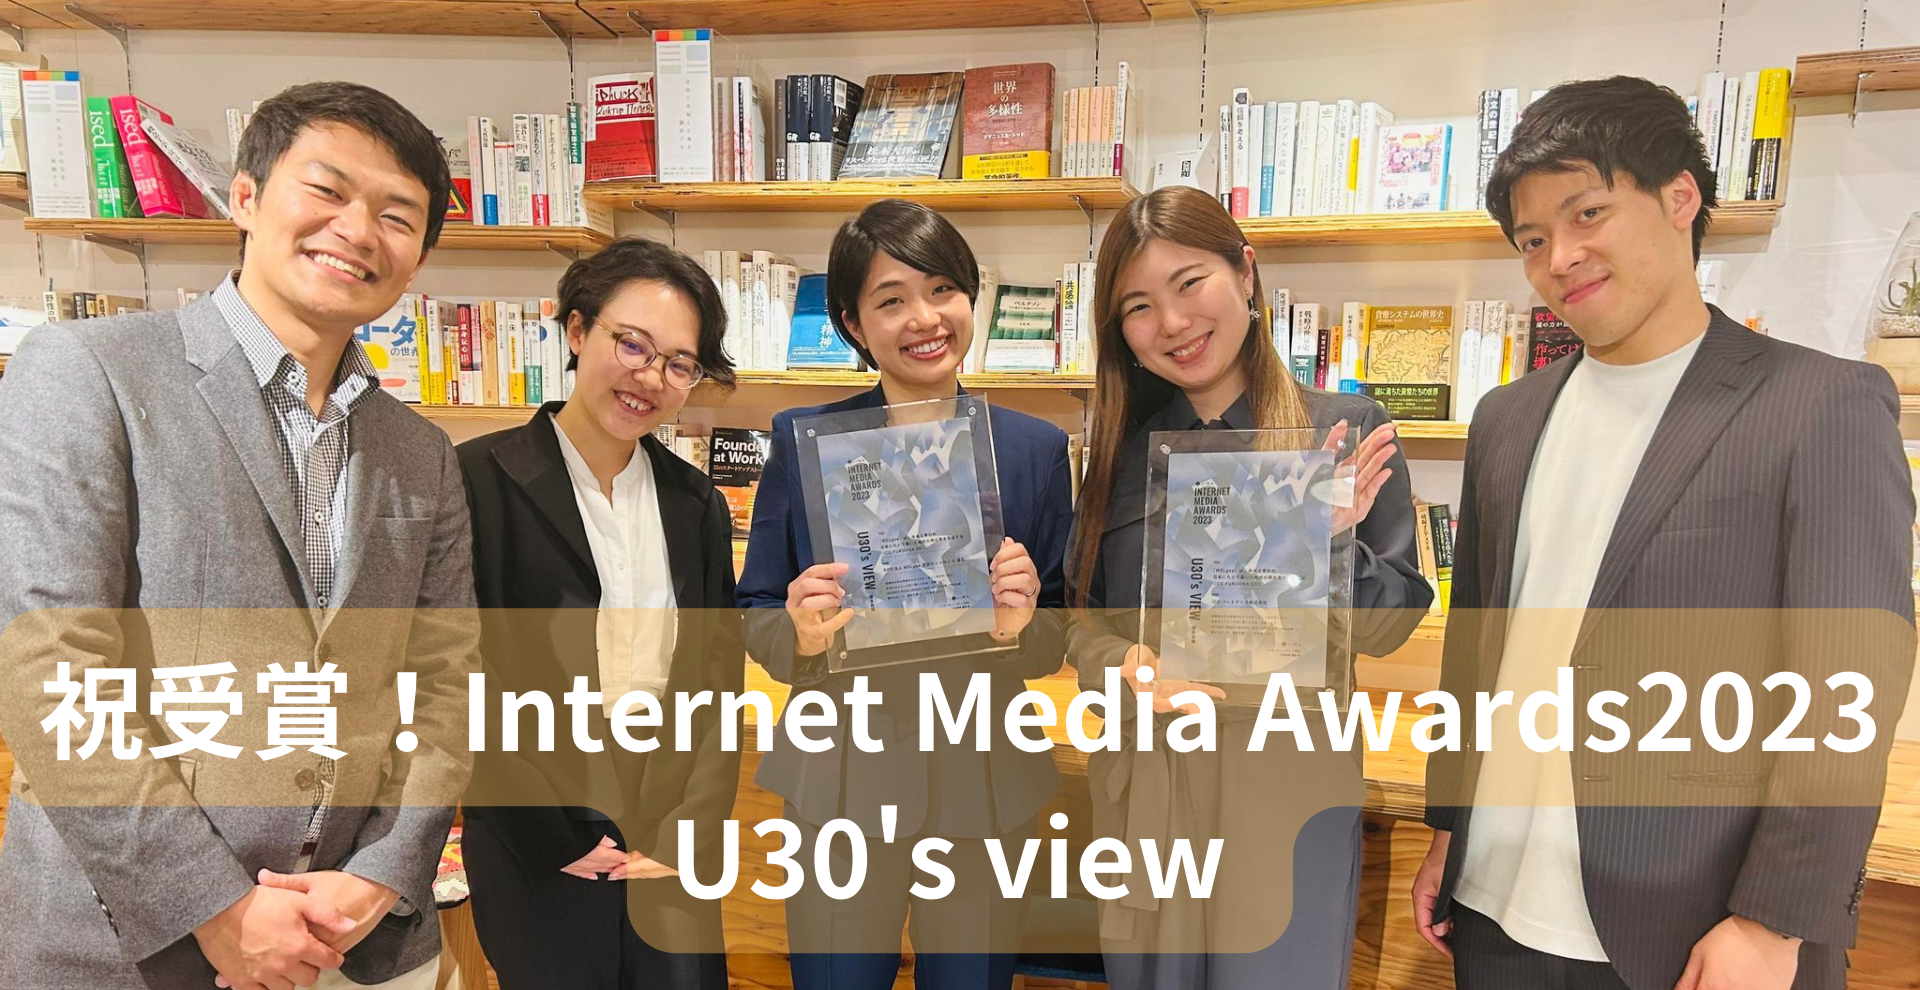 Internet Media Awards2023 U30's view 受賞しました！